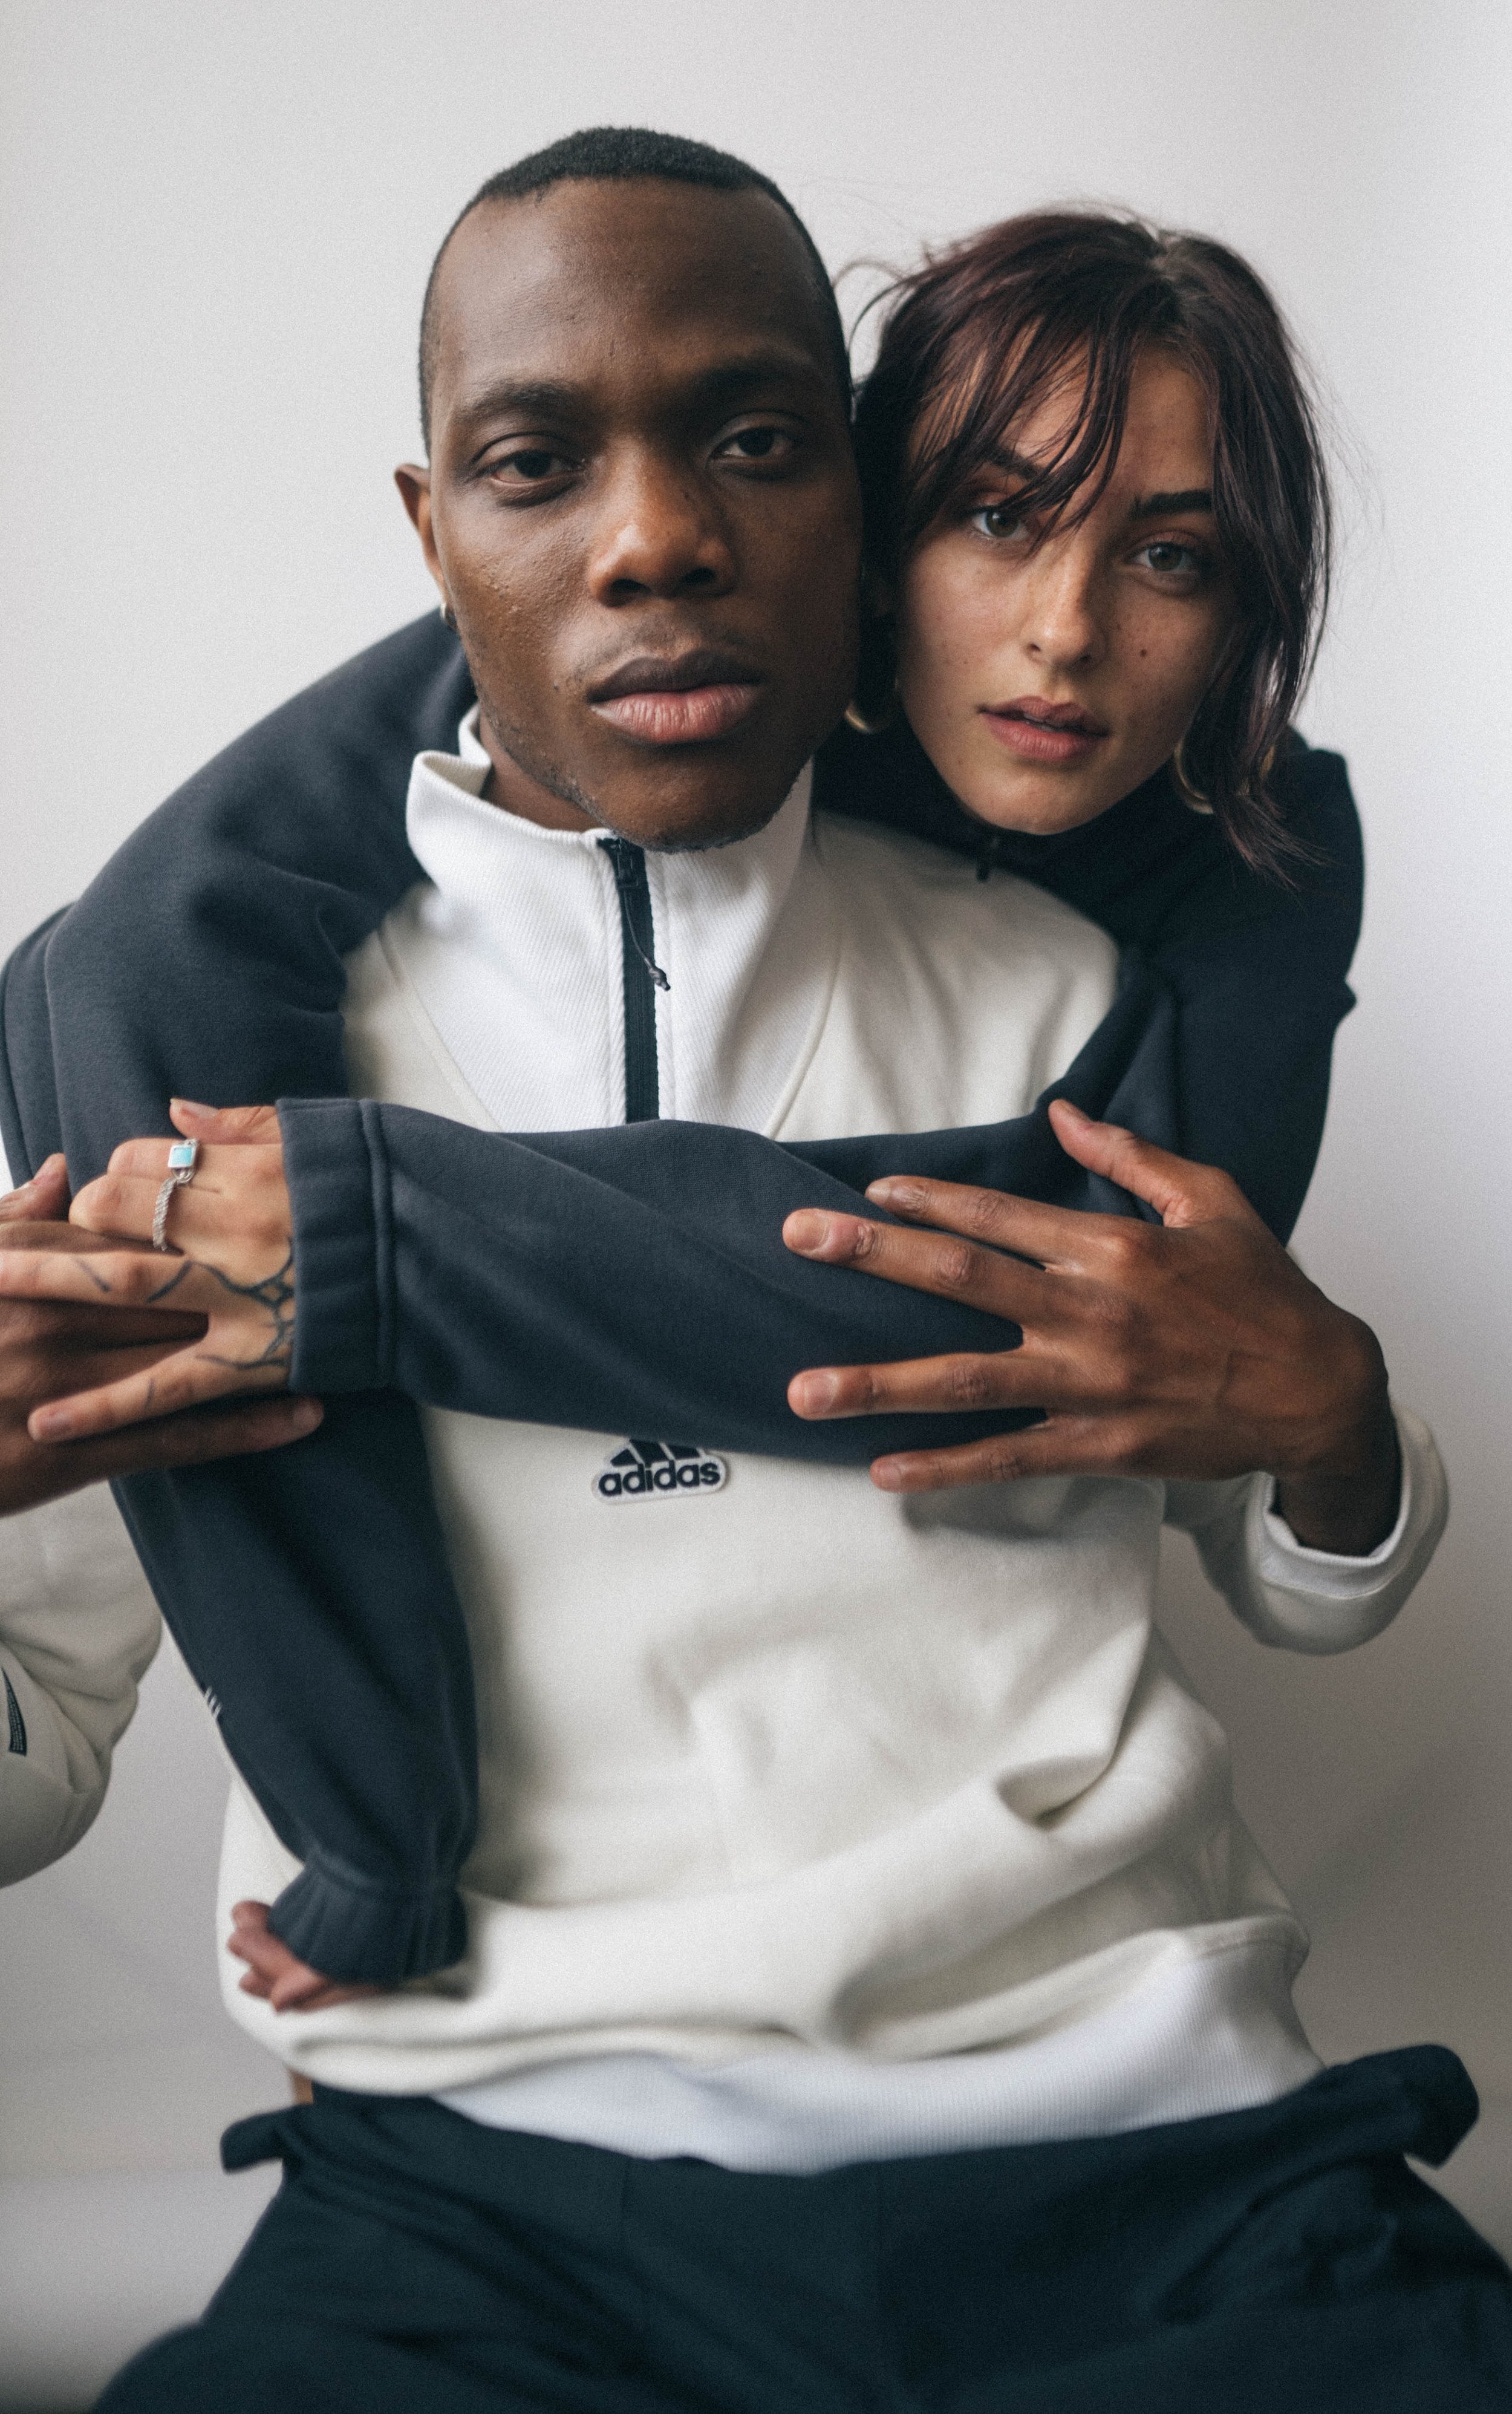  Friends Ikenna &amp; Morgan for “Adidas”, Digital 